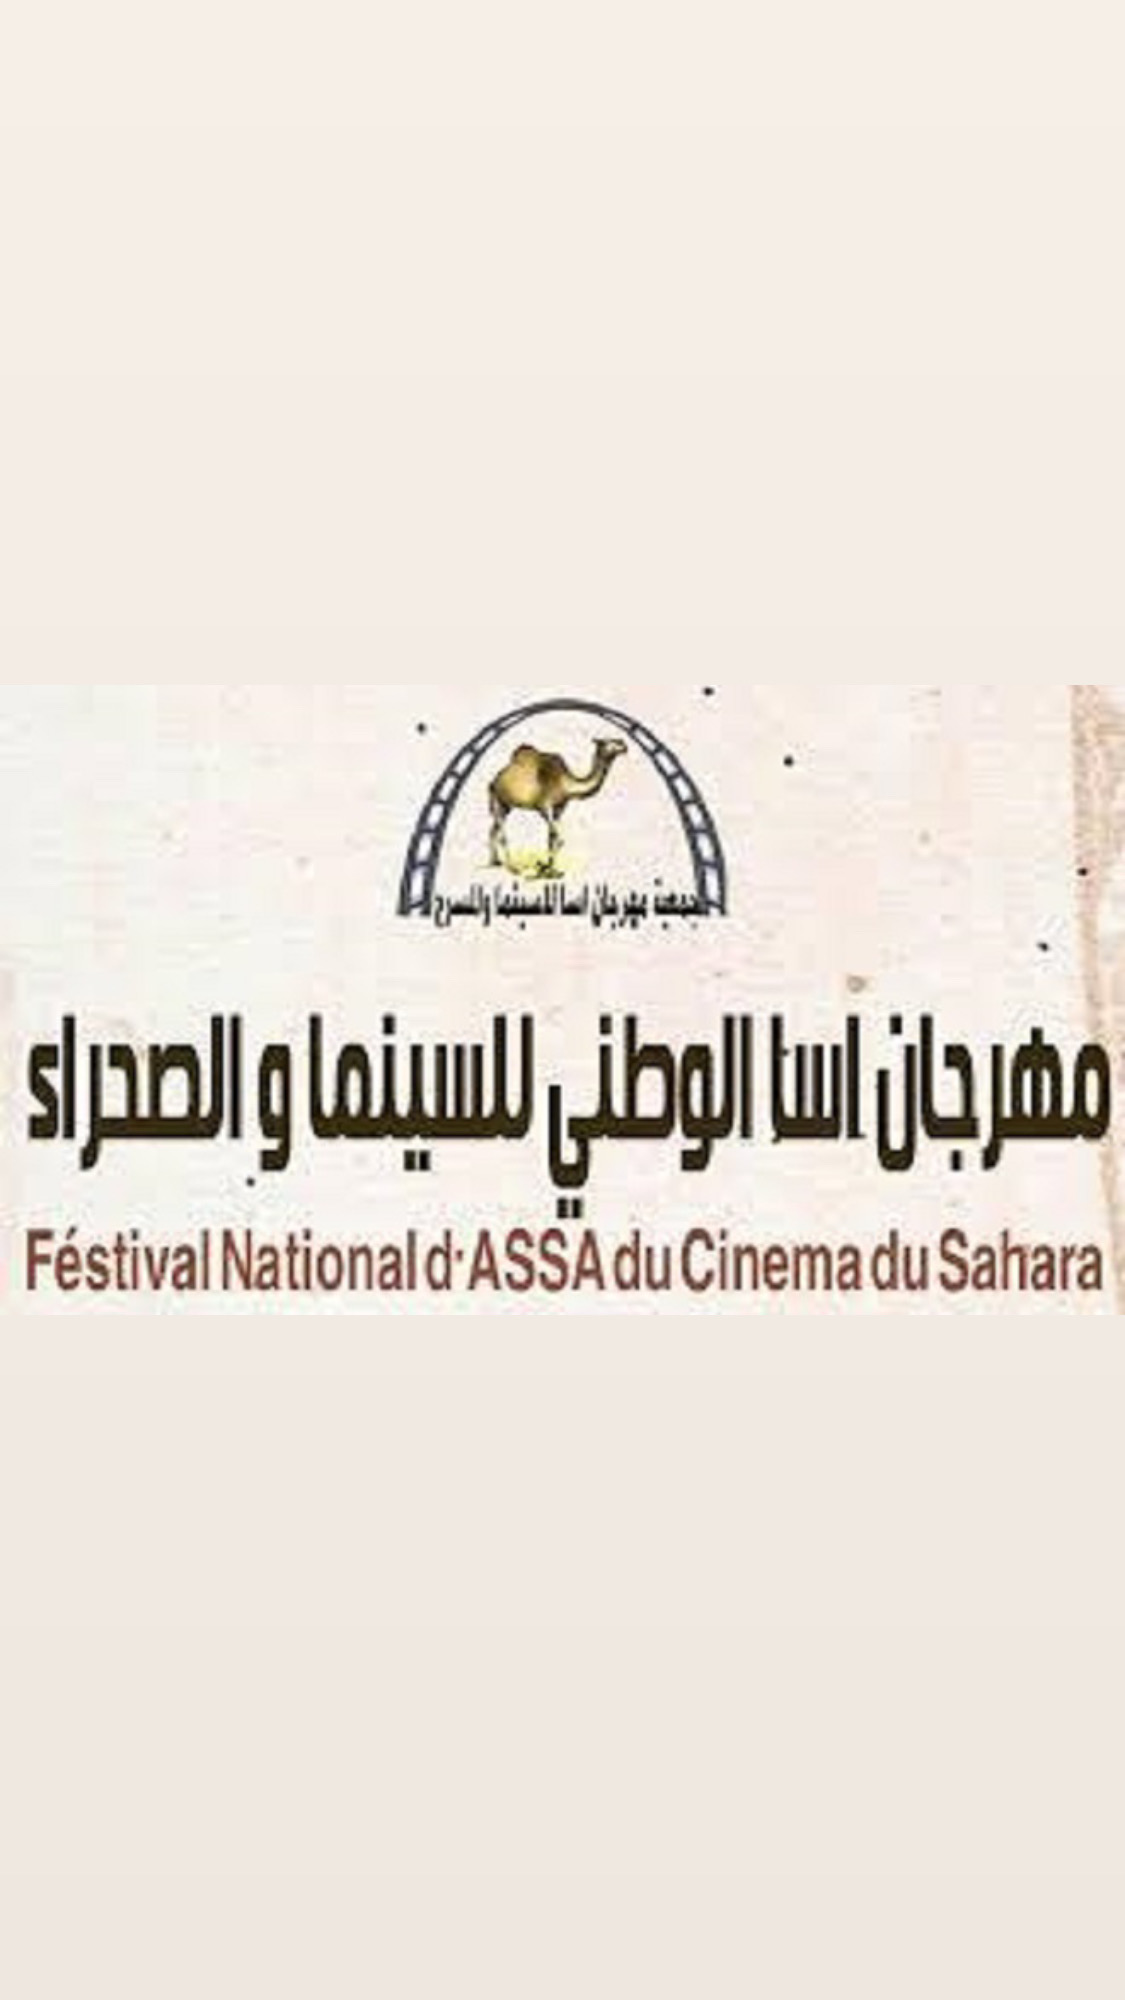 Festival international du cinéma et du Sahara d'Assa